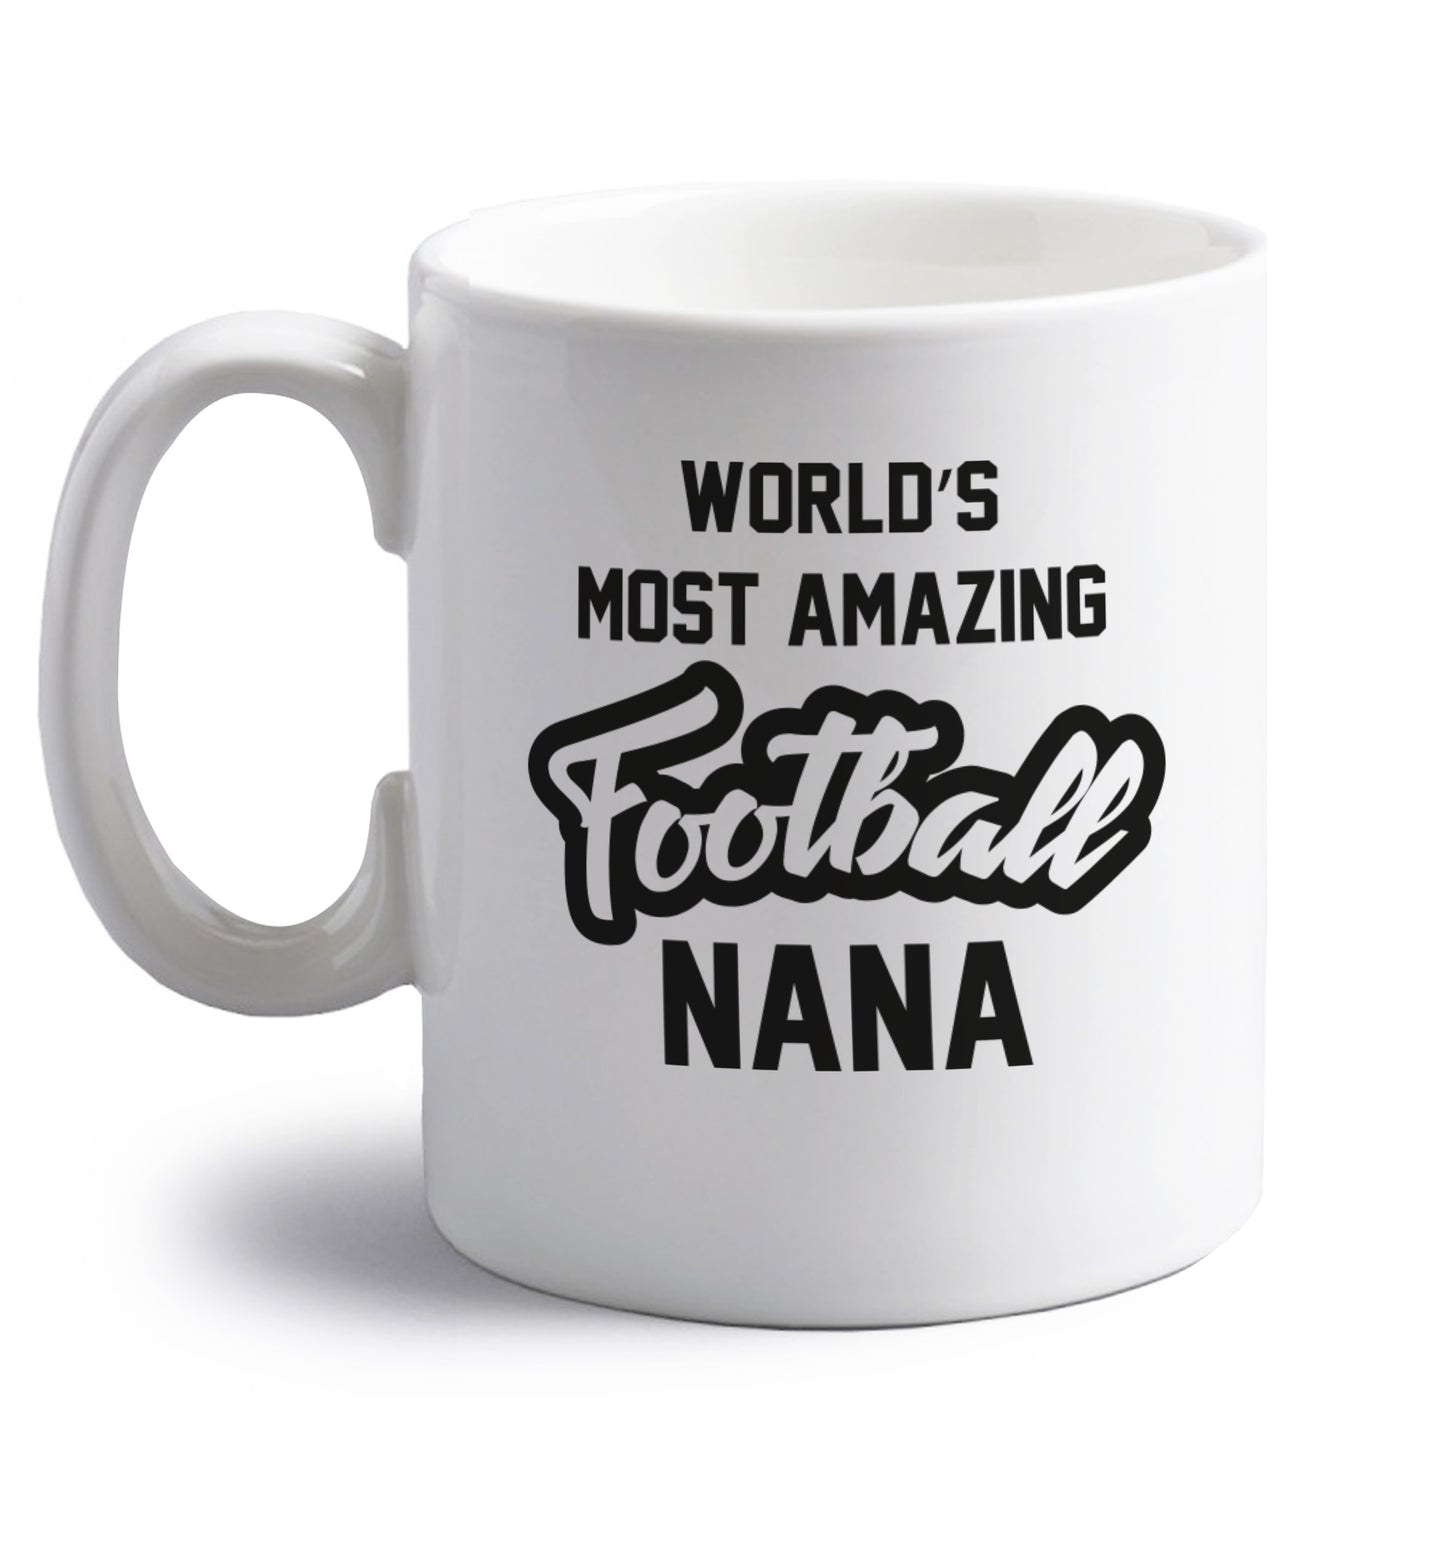 Worlds most amazing football nana right handed white ceramic mug 